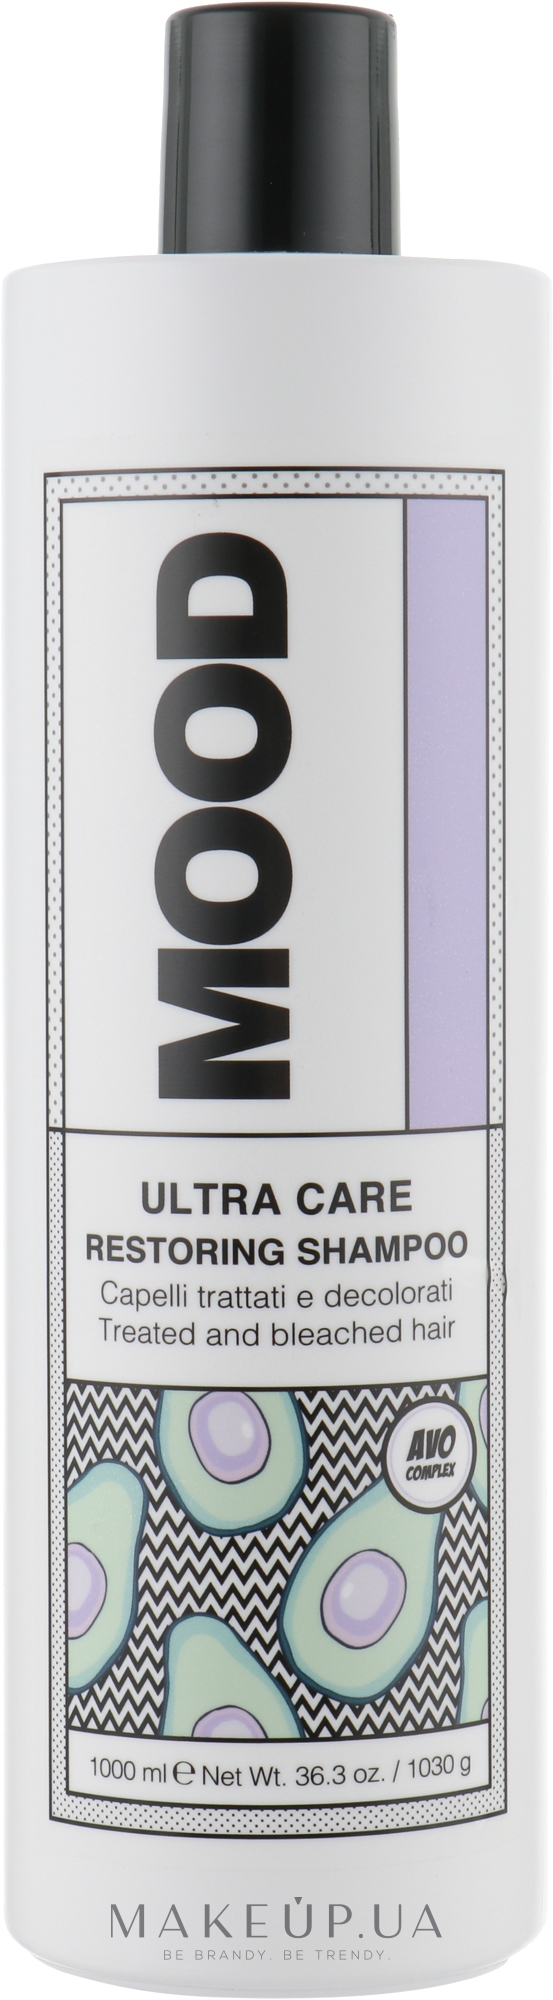 Восстанавливающий шампунь - Mood Ultra Care Restoring Shampoo — фото 1000ml